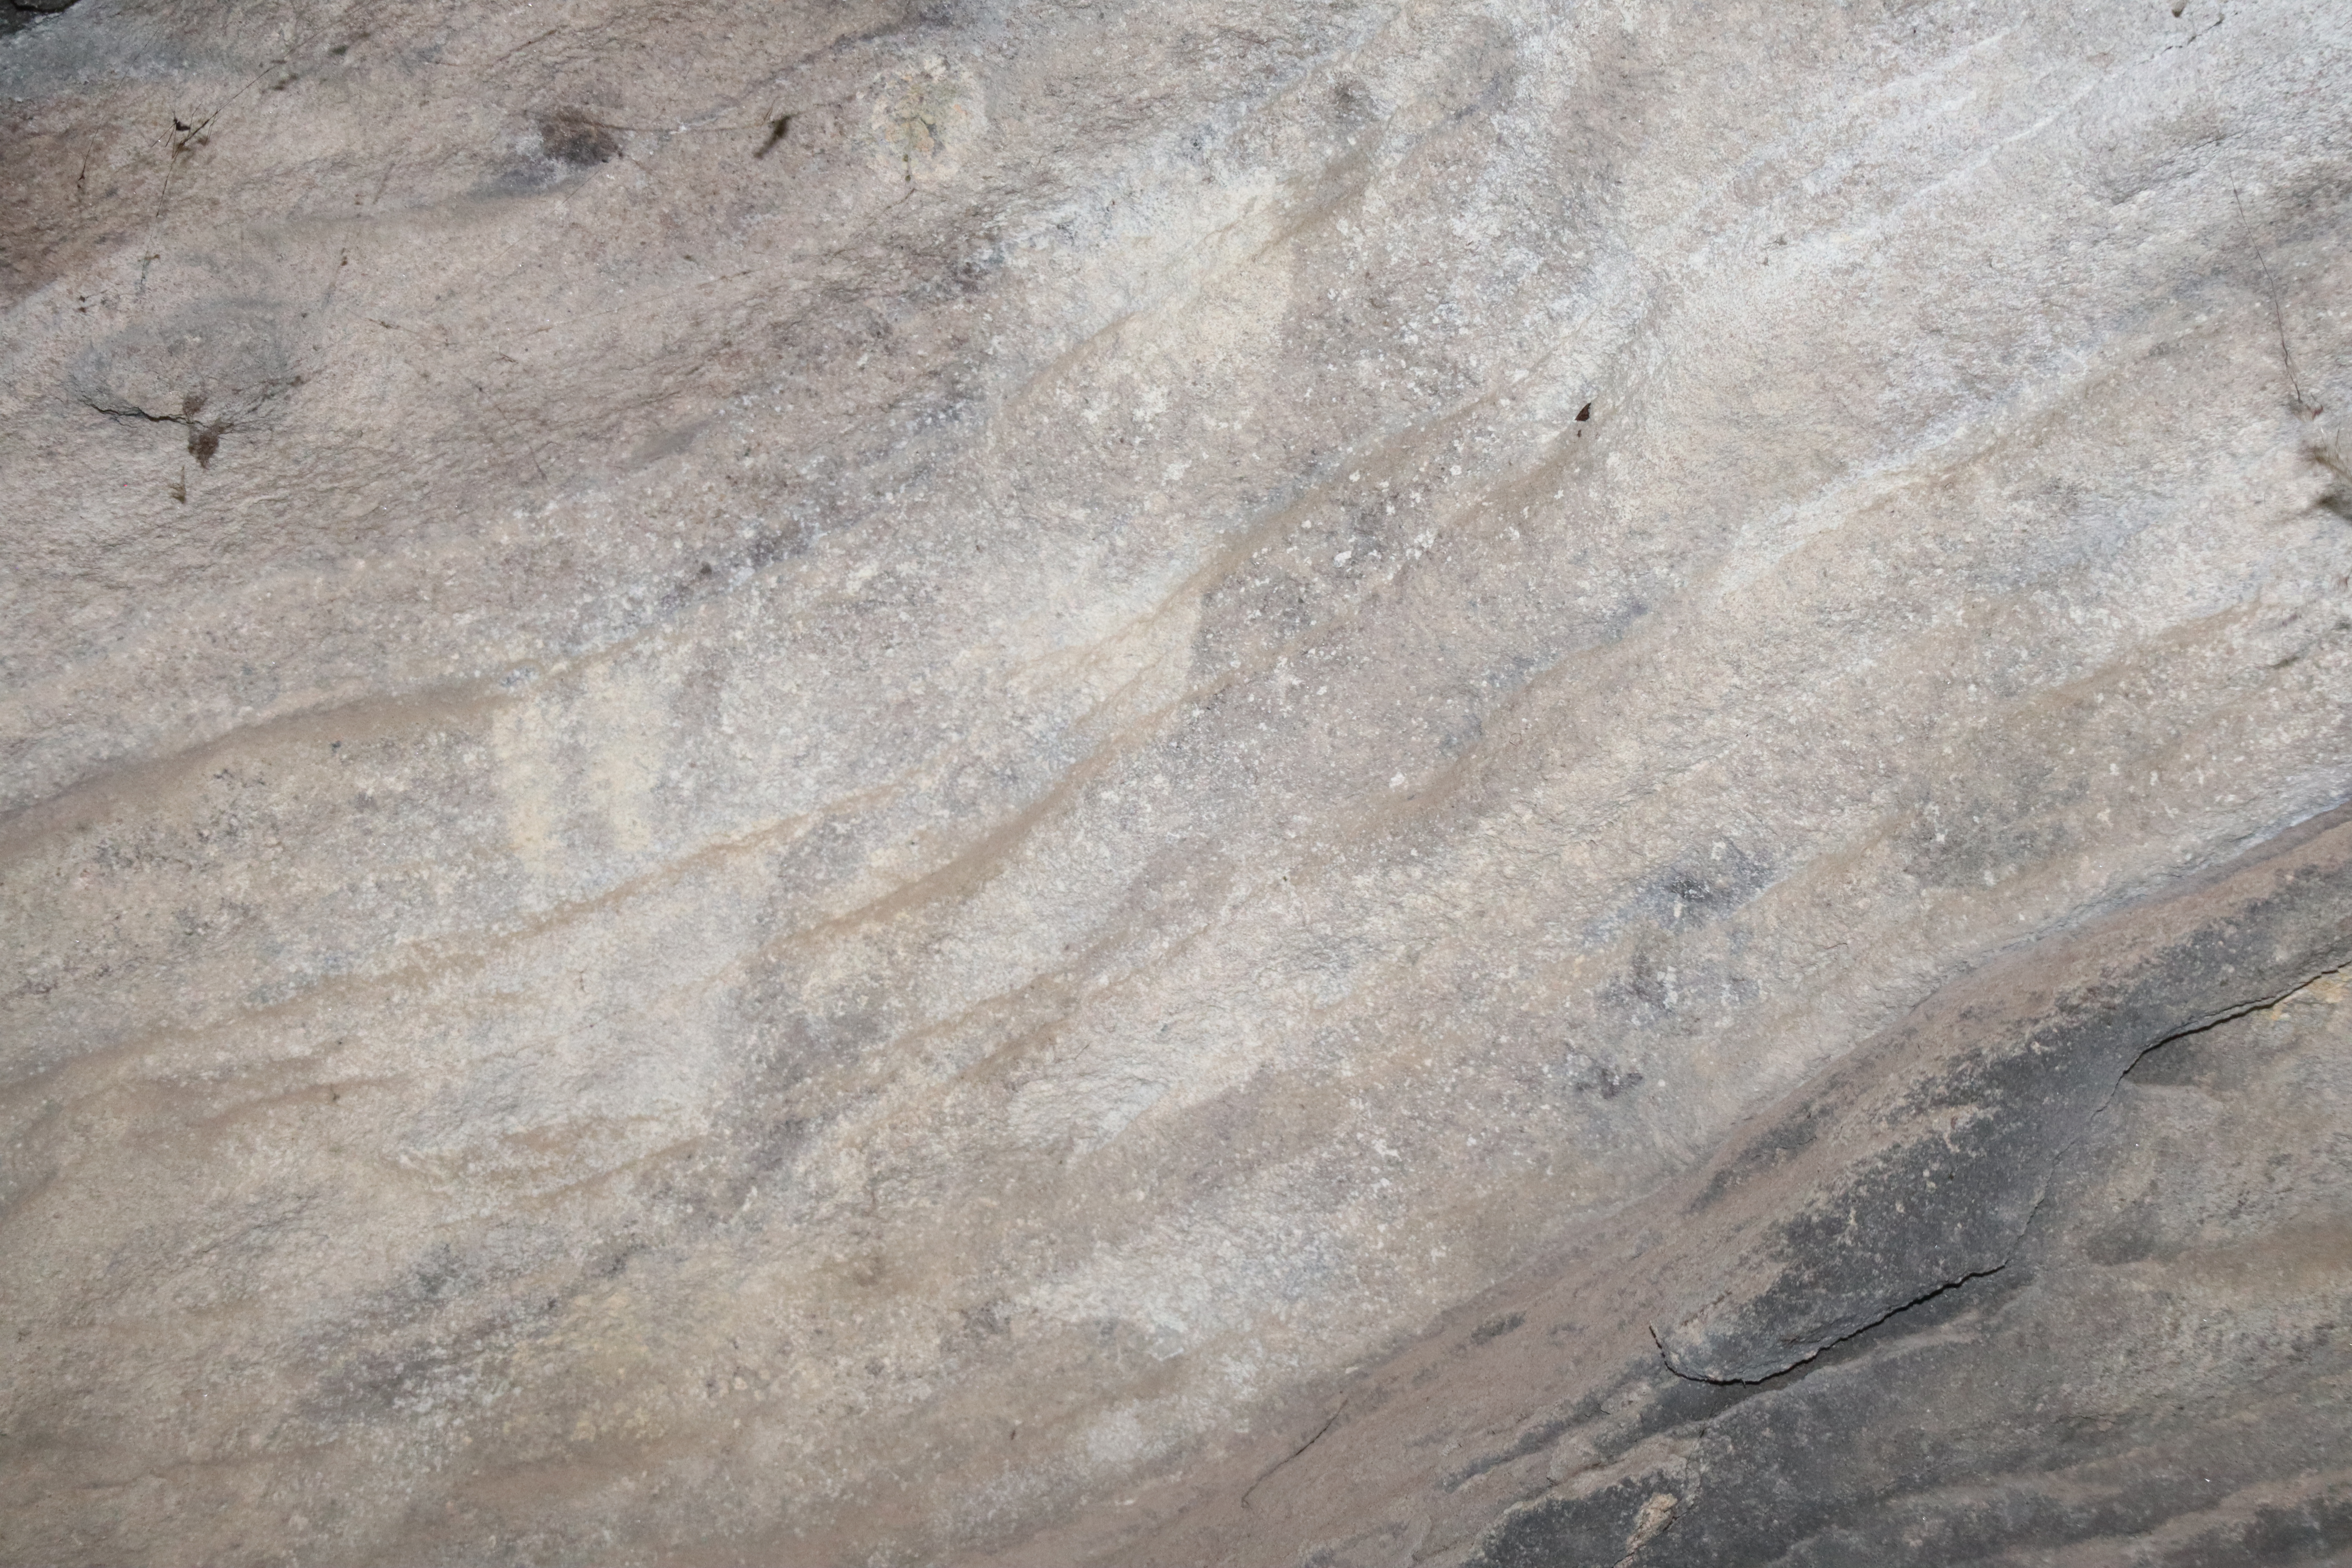 Aboriginal Handprints on a rock face